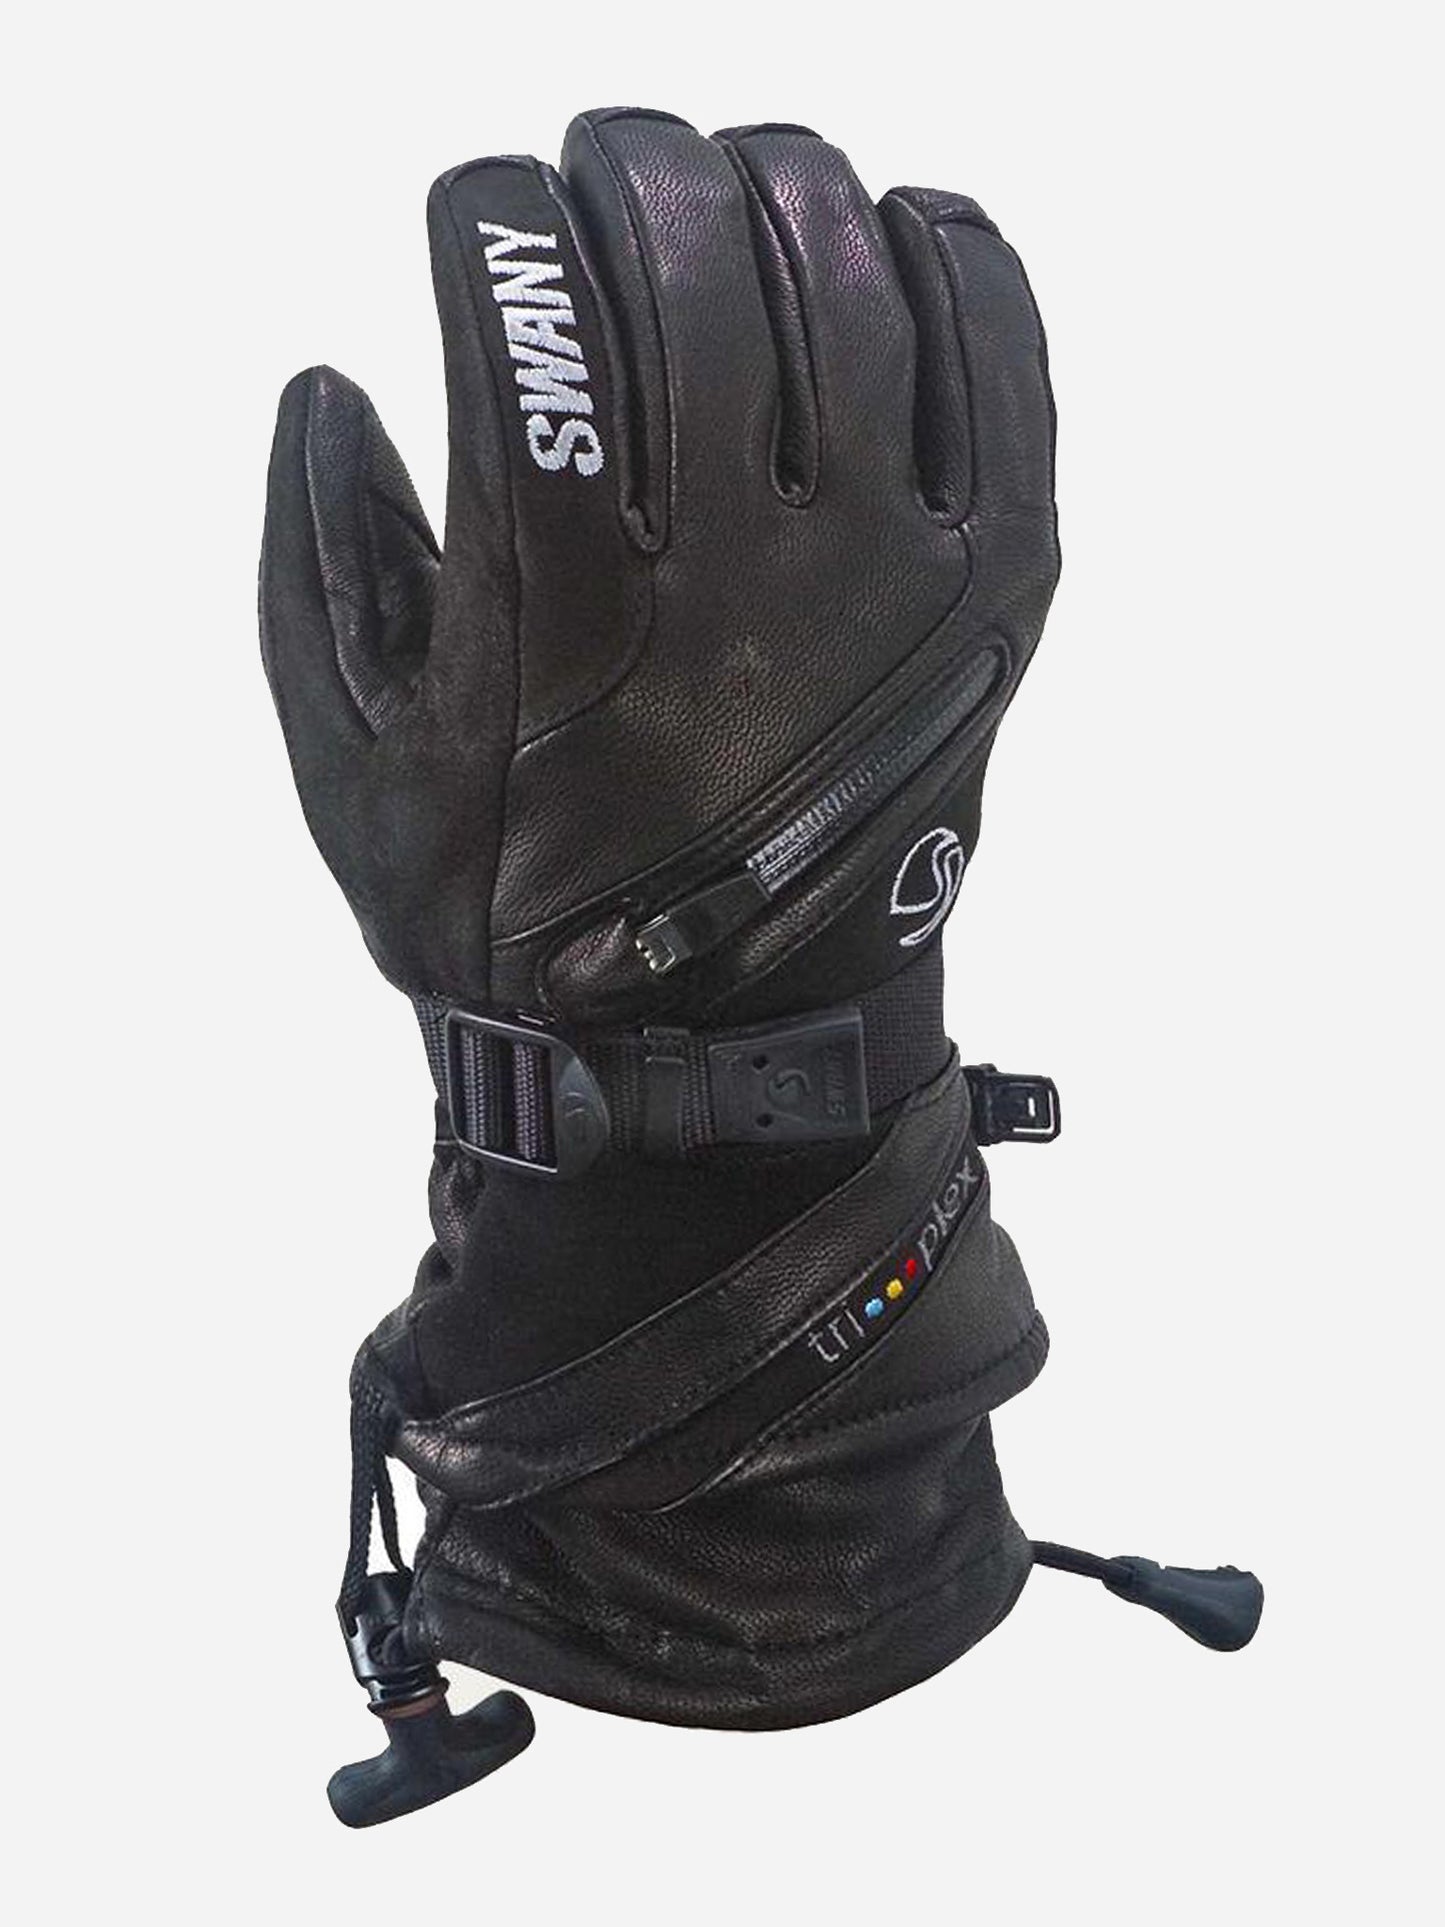 Swany Men's X-Cell II Glove